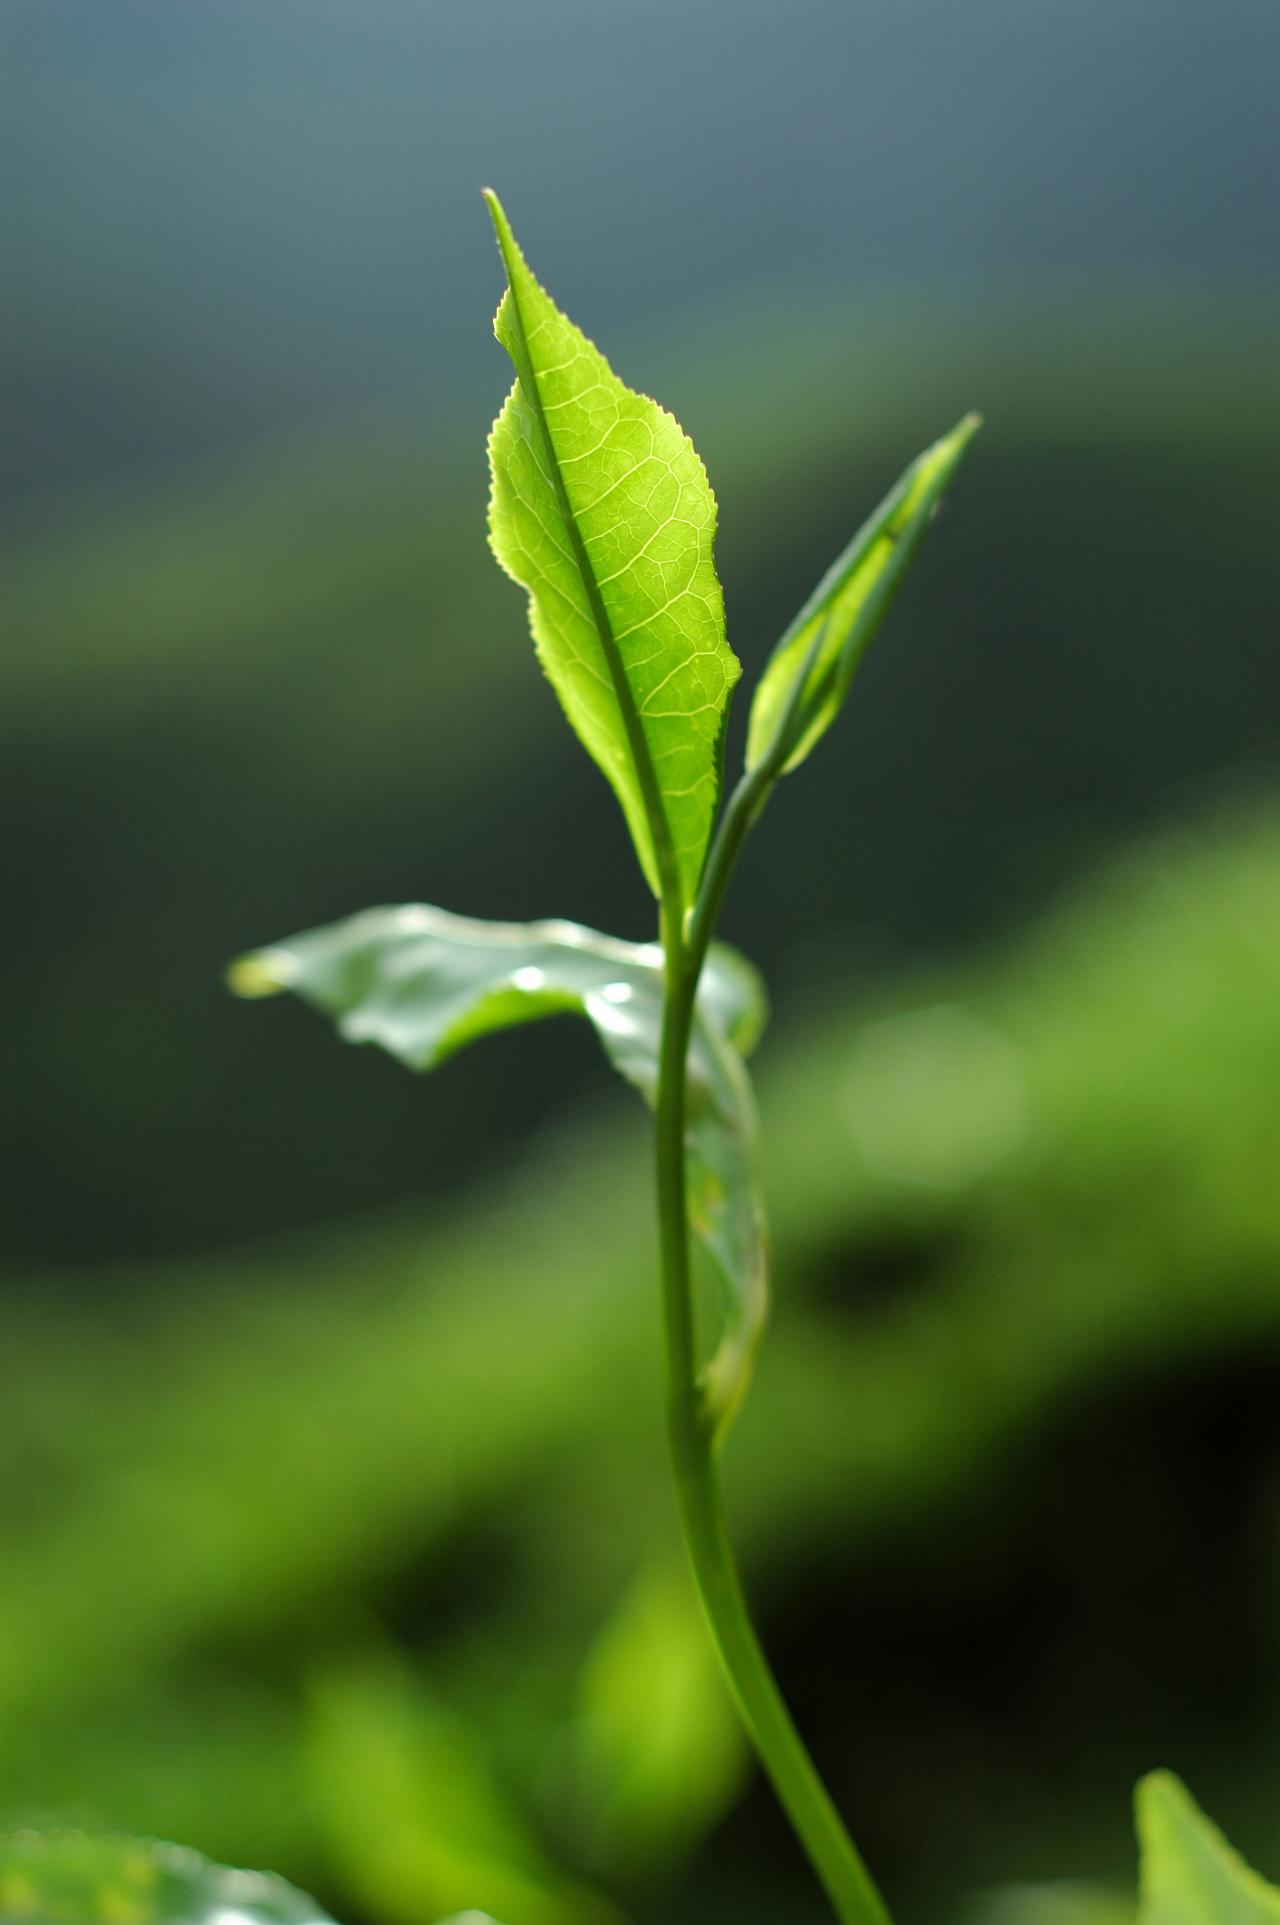 Theeplant Camellia sinensis